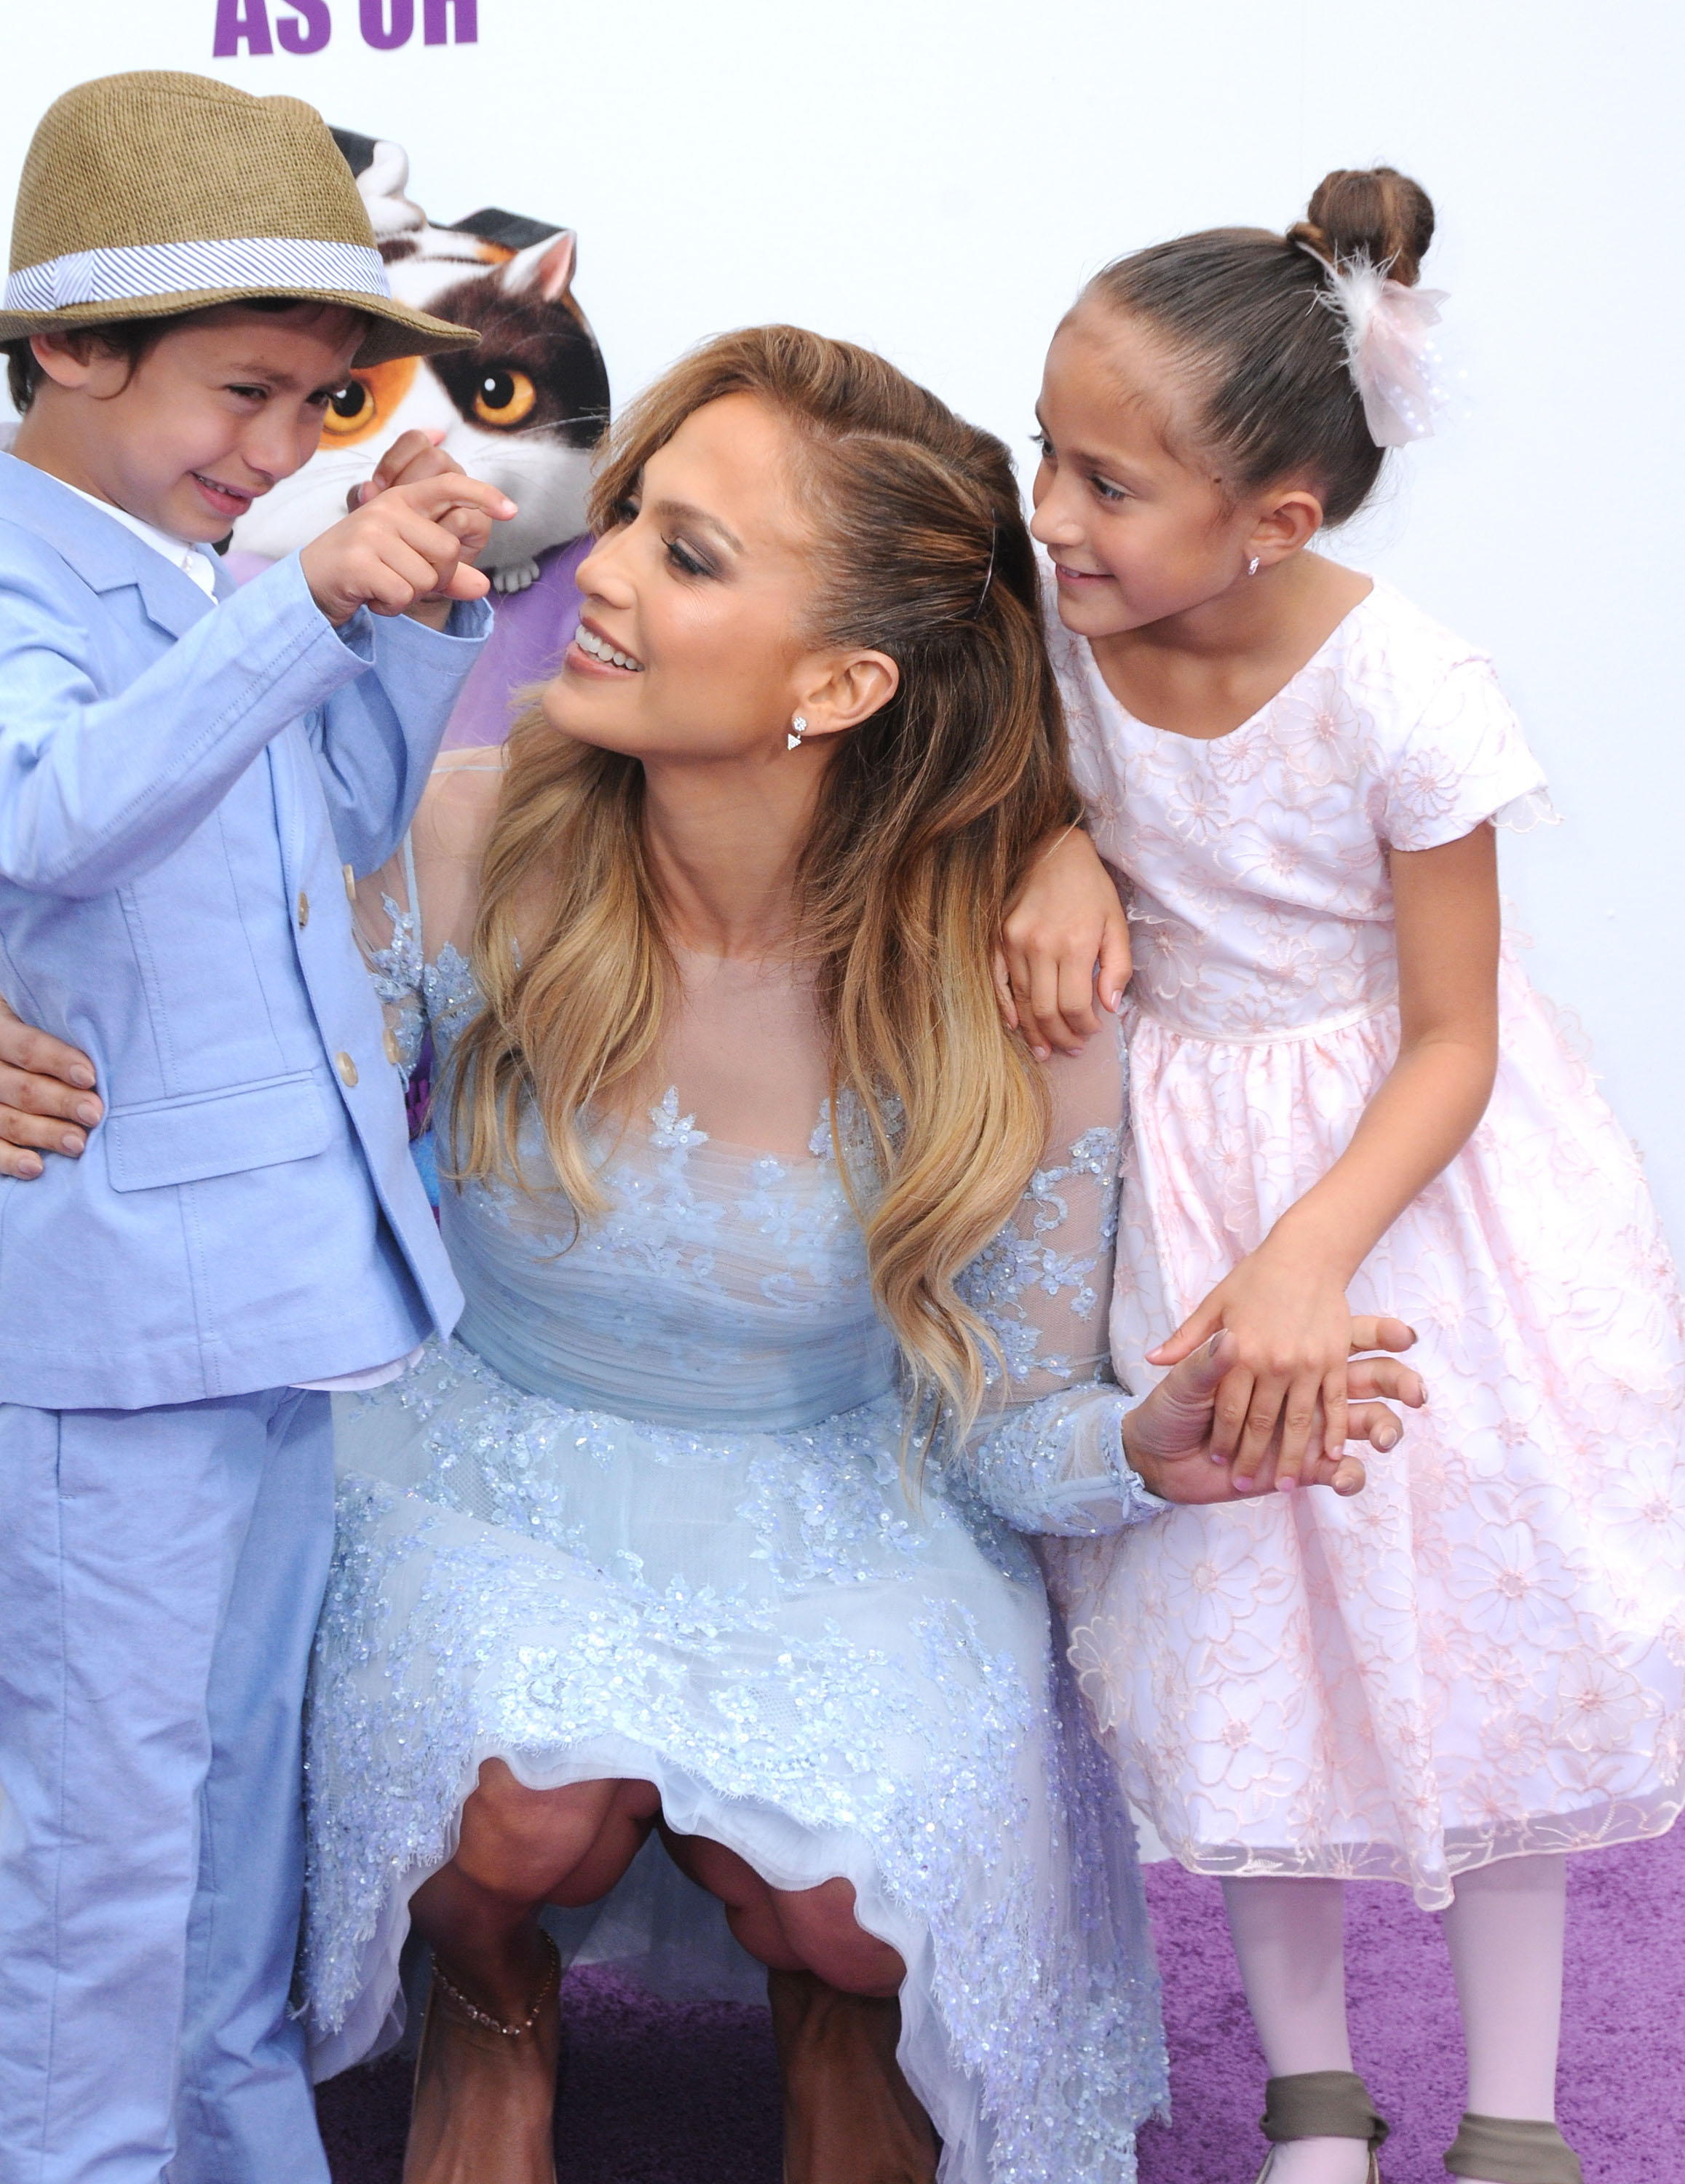 Max Muniz, Jennifer Lopez y Emme Muniz en el estreno de "Home", 2015 | Foto: Getty Images